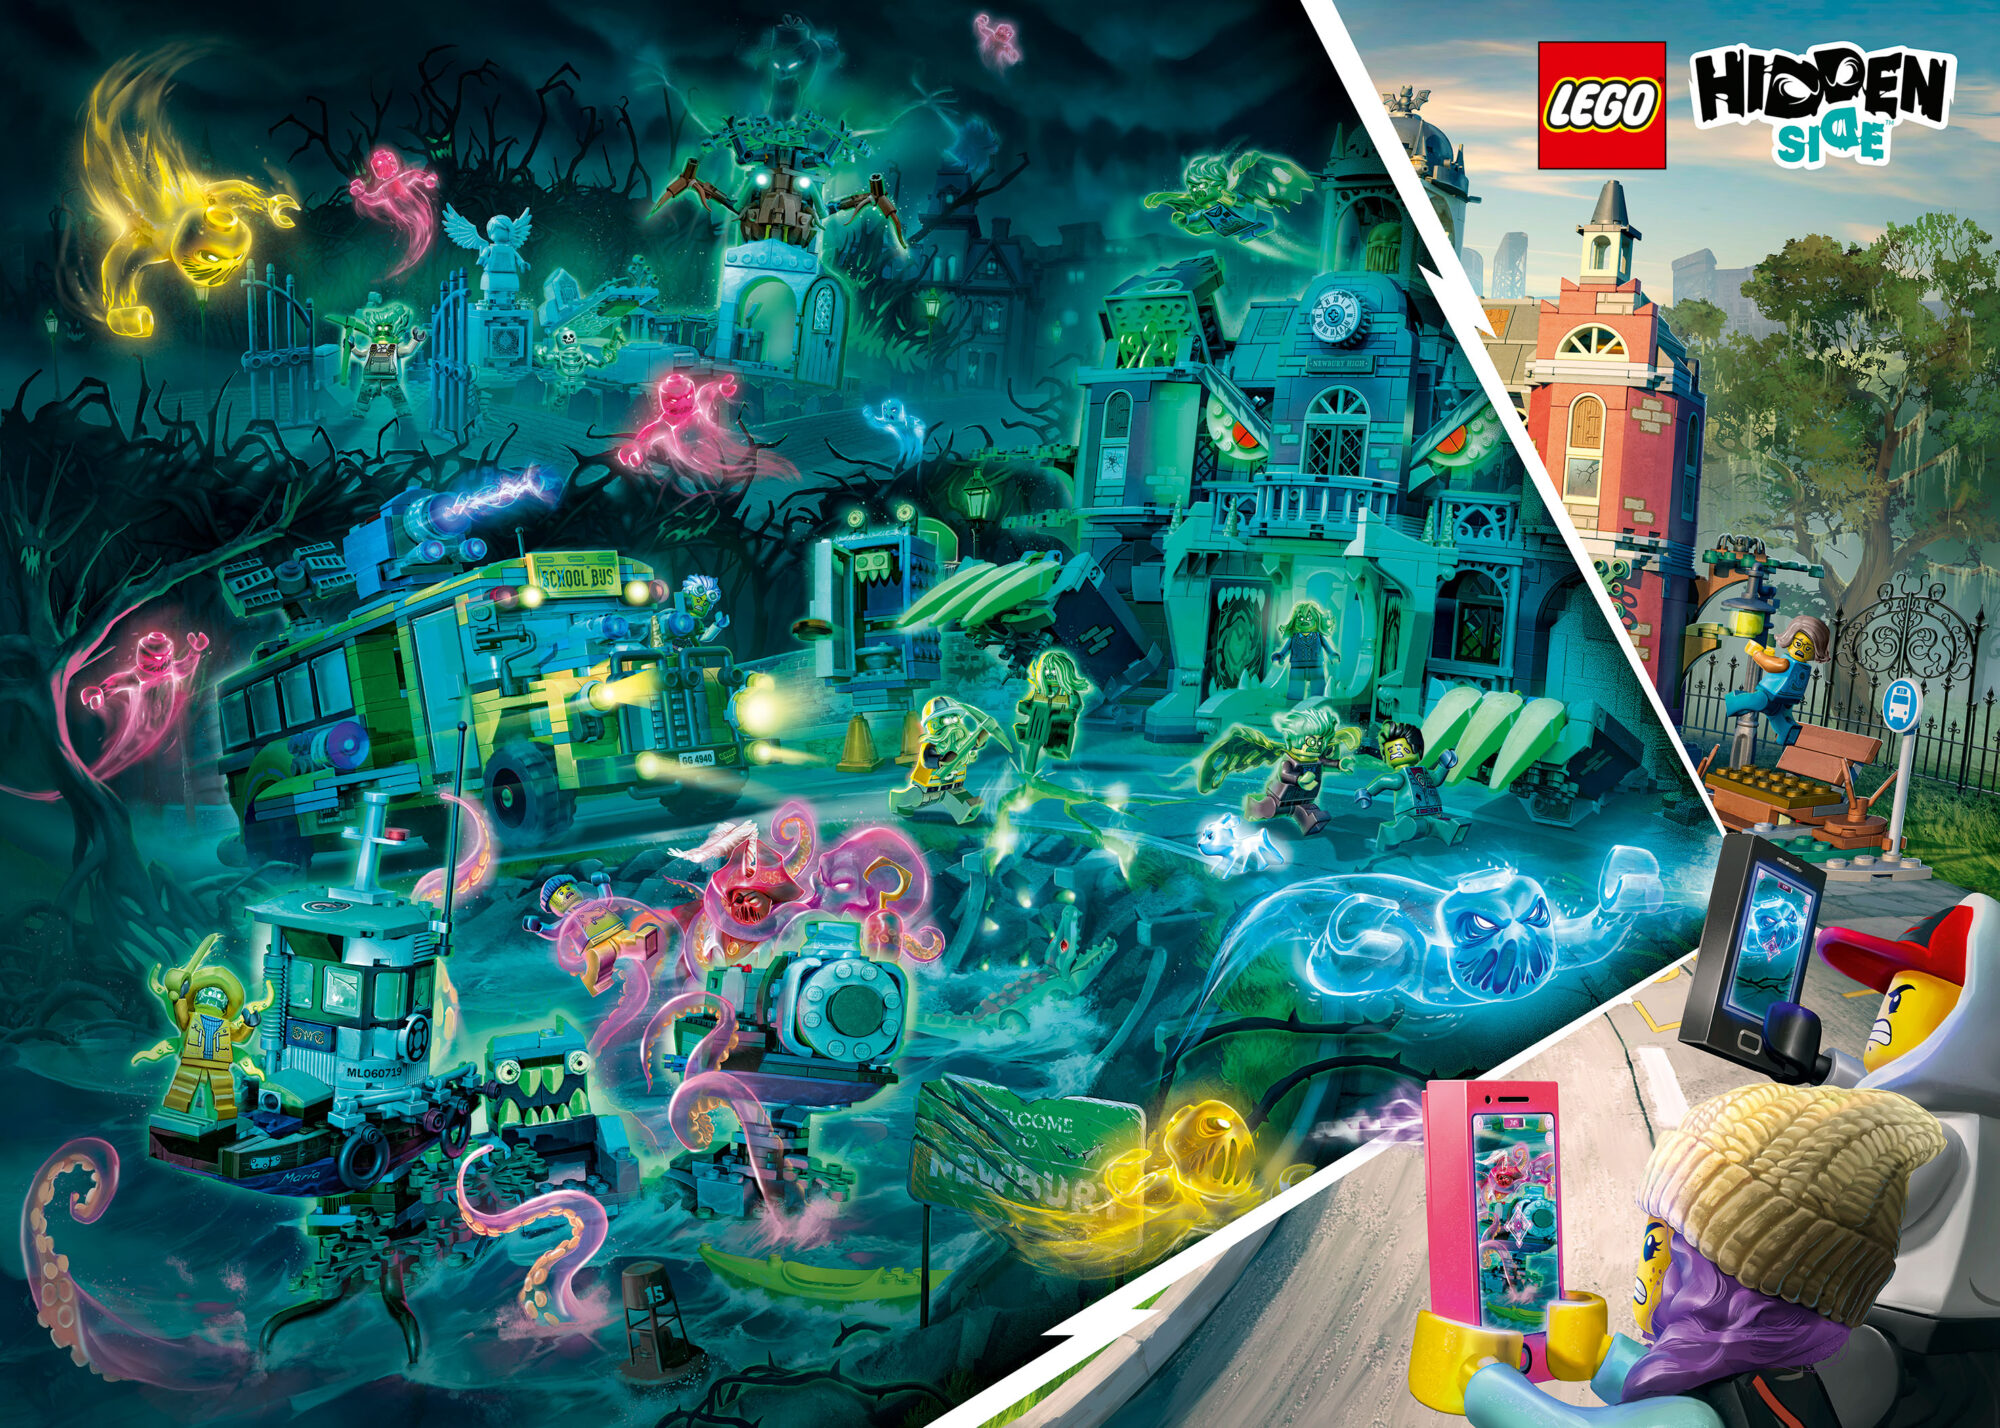 LEGO Hidden Side: sali sullo Schoolbus a caccia di fantasmi! thumbnail